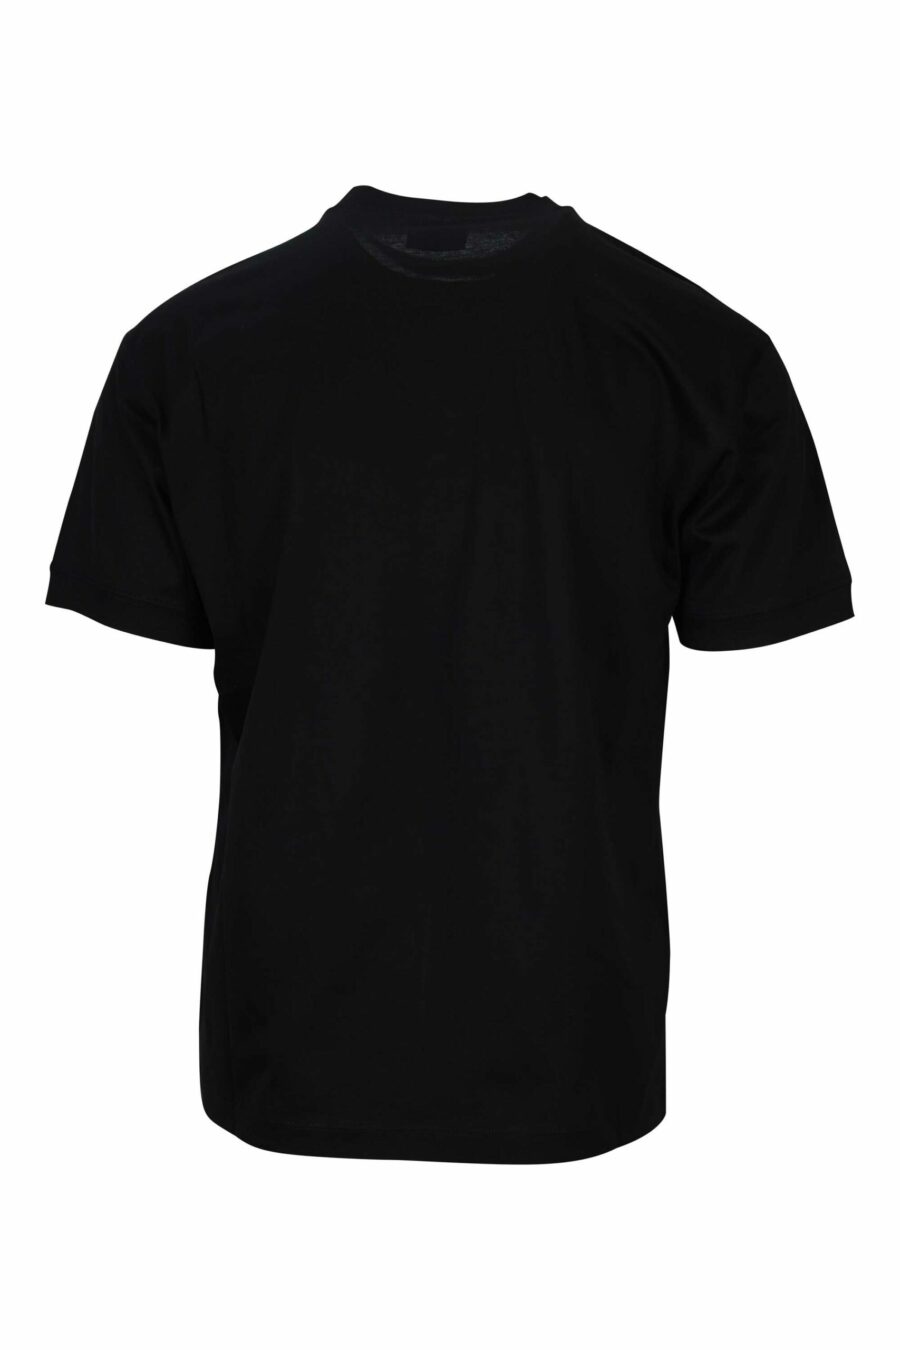 Camiseta negra con maxilogo "lux identity" en recuadro verde - 8058947495726 1 scaled